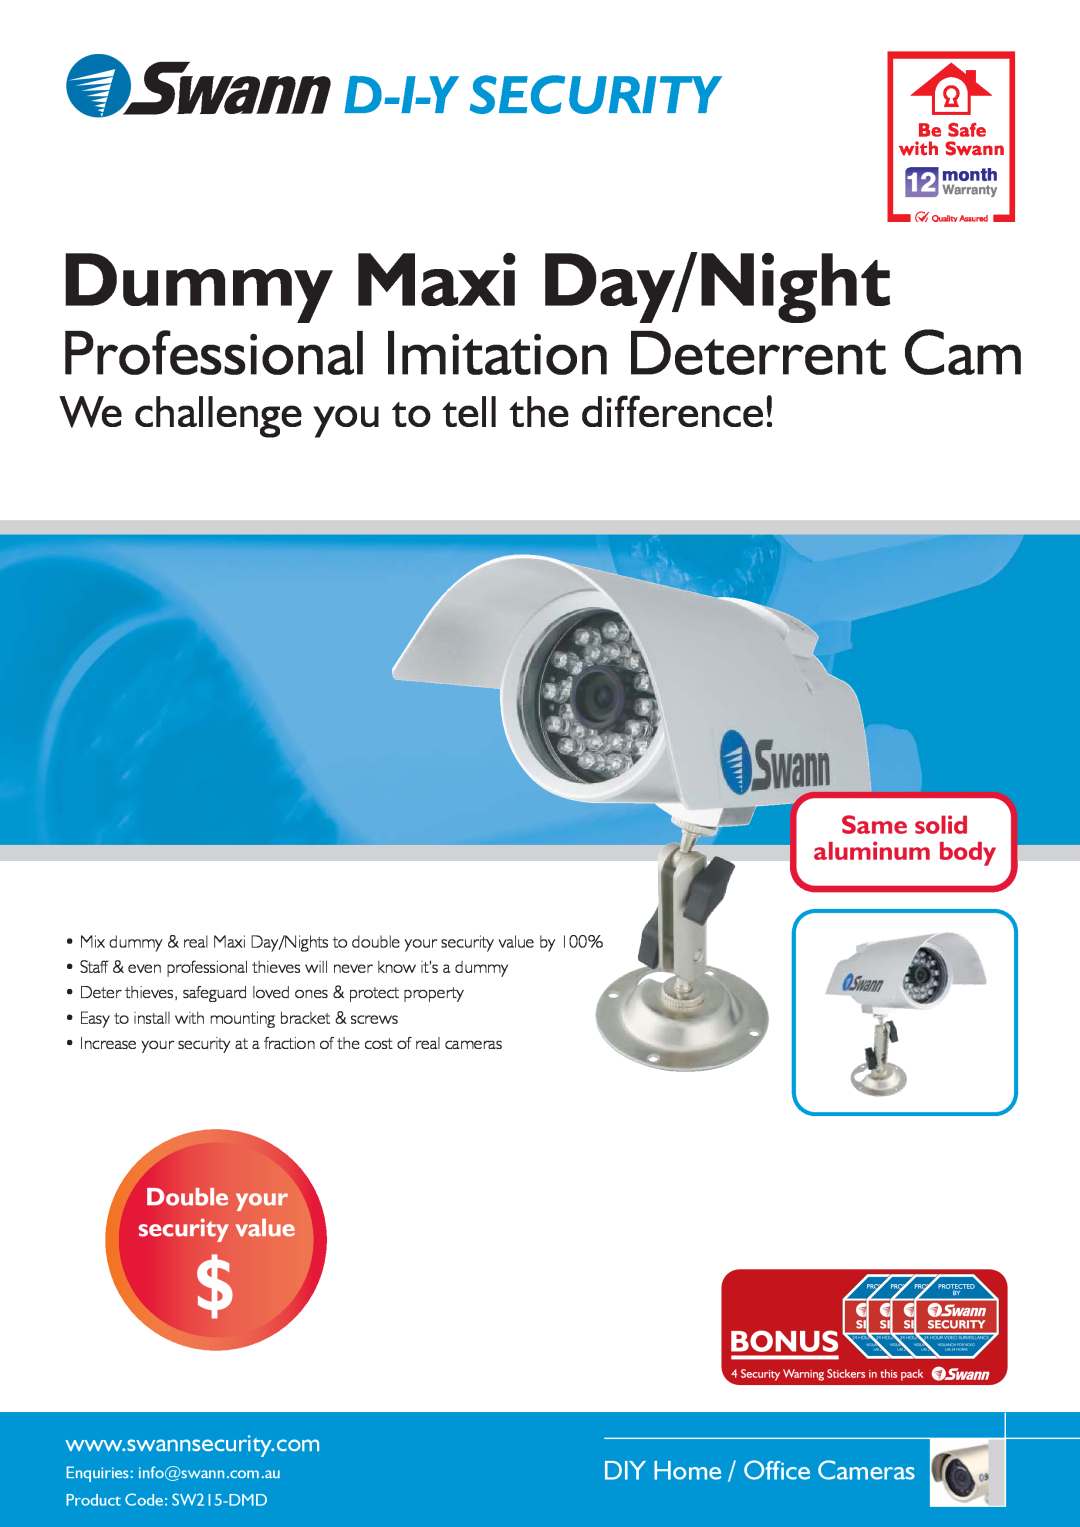 Swann SW215-DMD warranty D-I-Y Security, Dummy Maxi Day/Night, Professional Imitation Deterrent Cam 